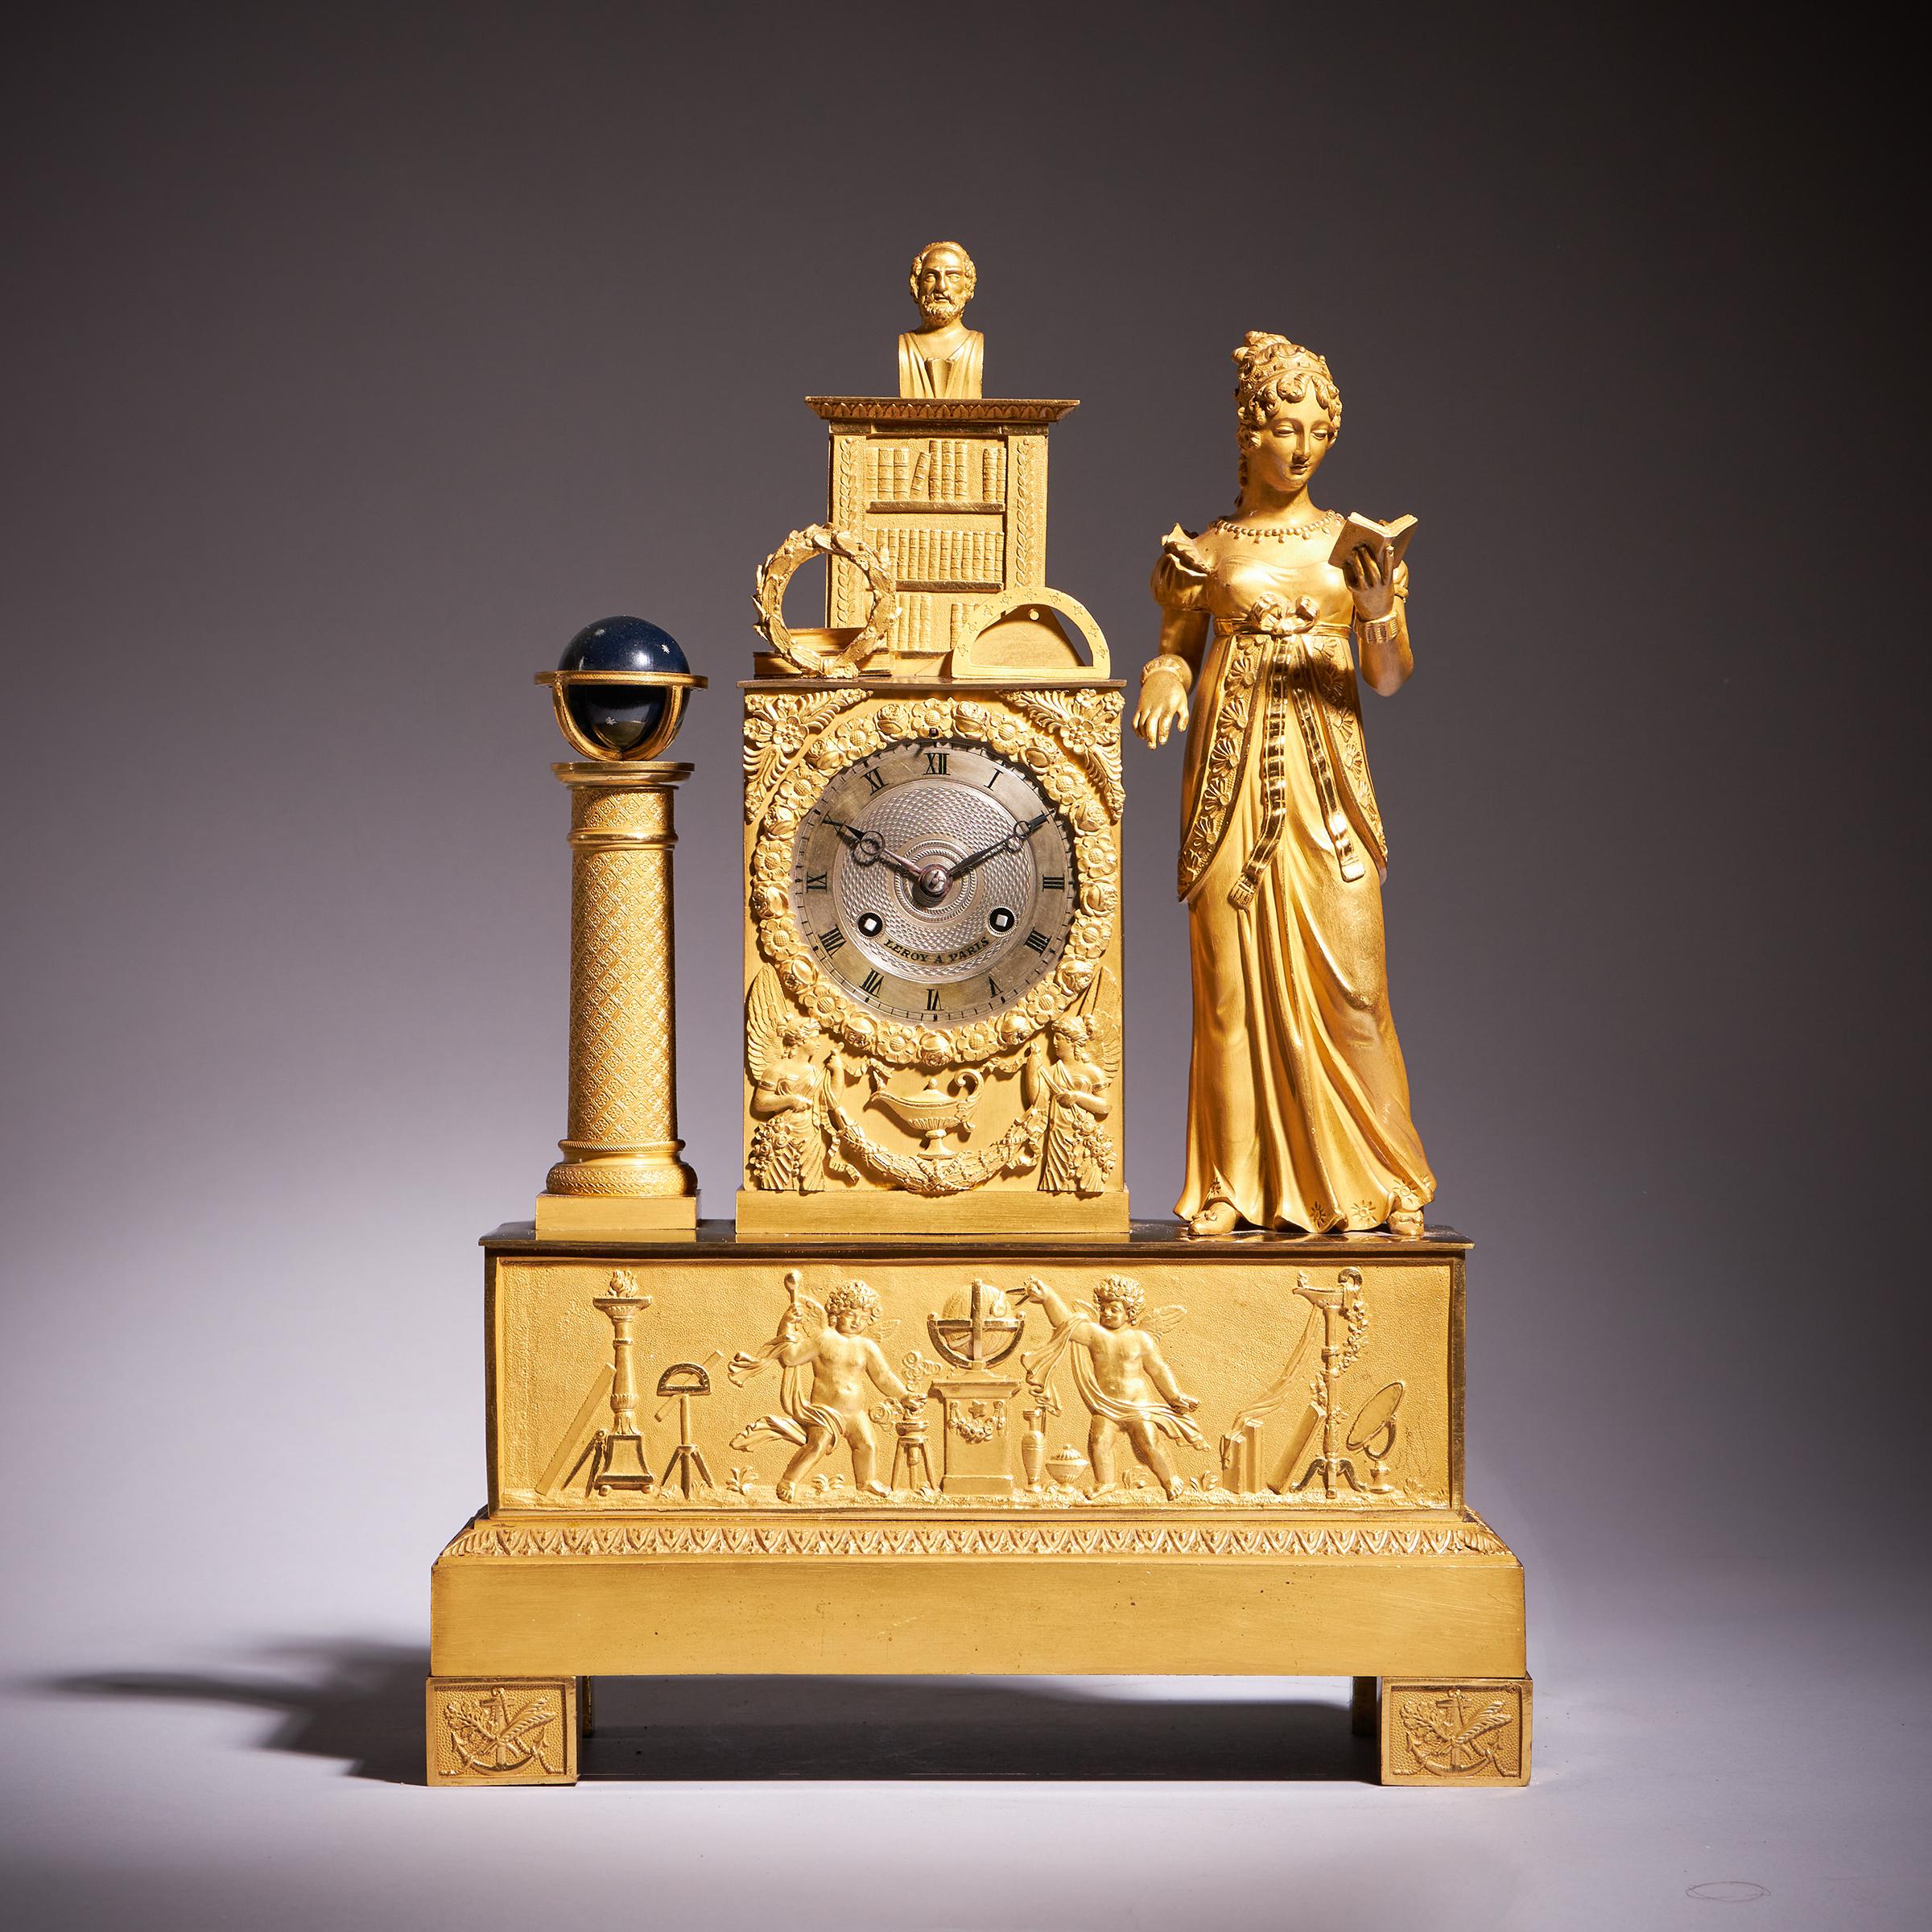 Fine 19th-century French ormolu mantel clock (pendule) by Leroy a Paris, c. 1825 1